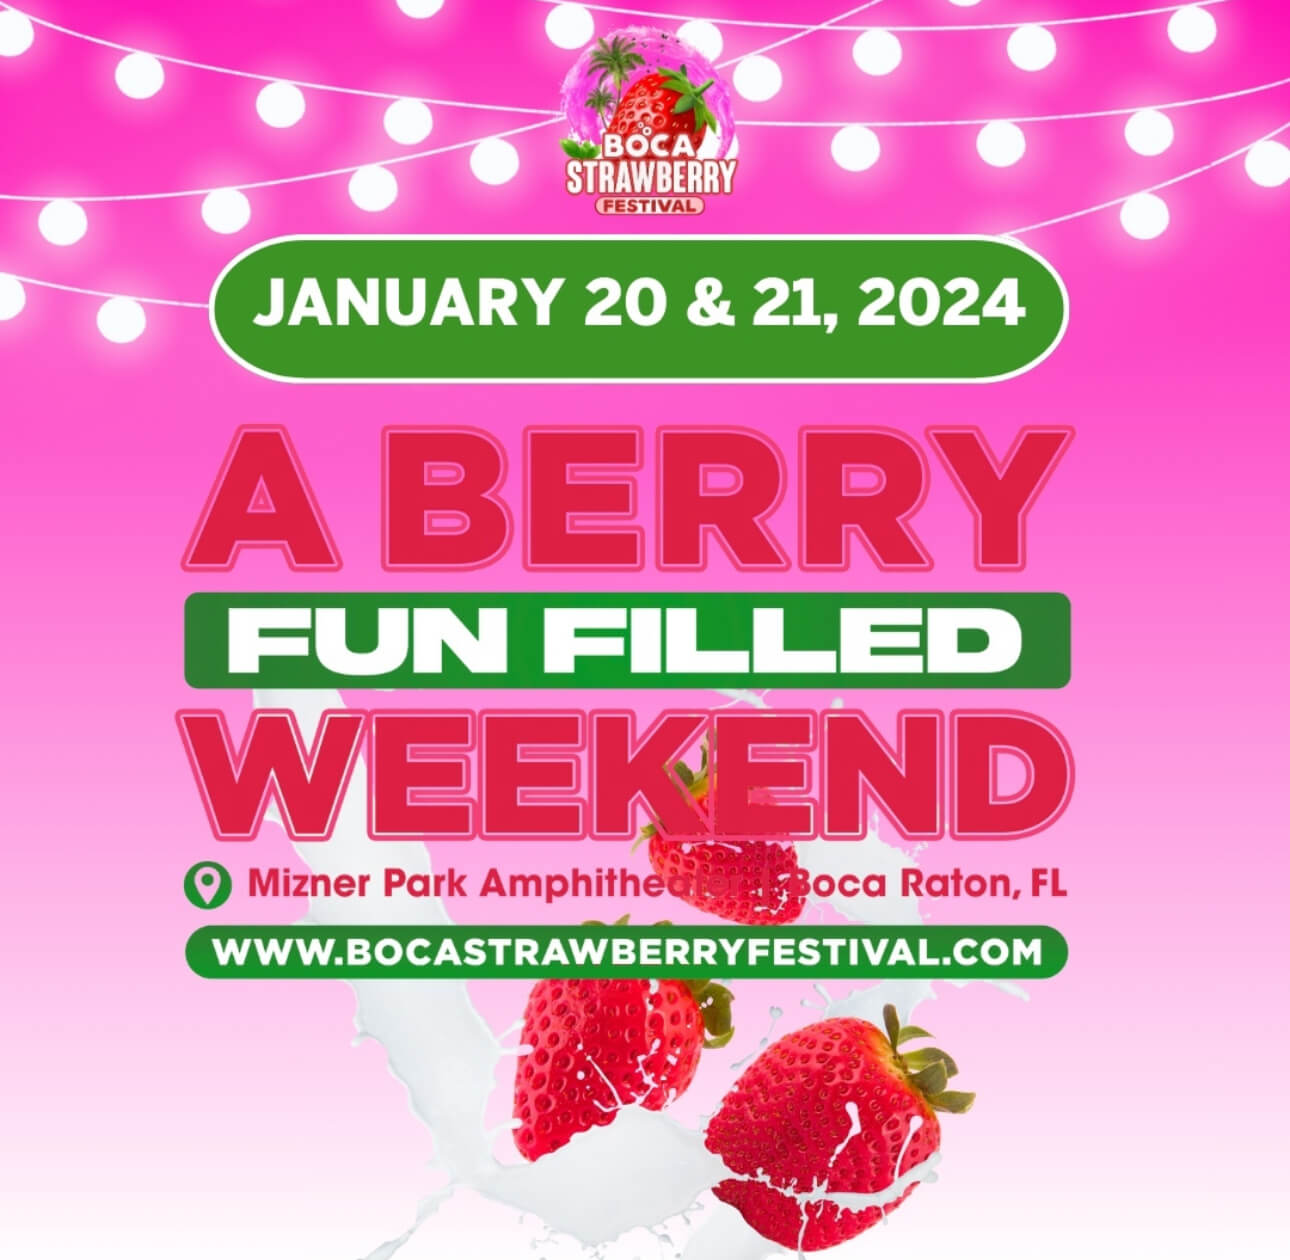 Boca Strawberry Festival promotional flyer. 